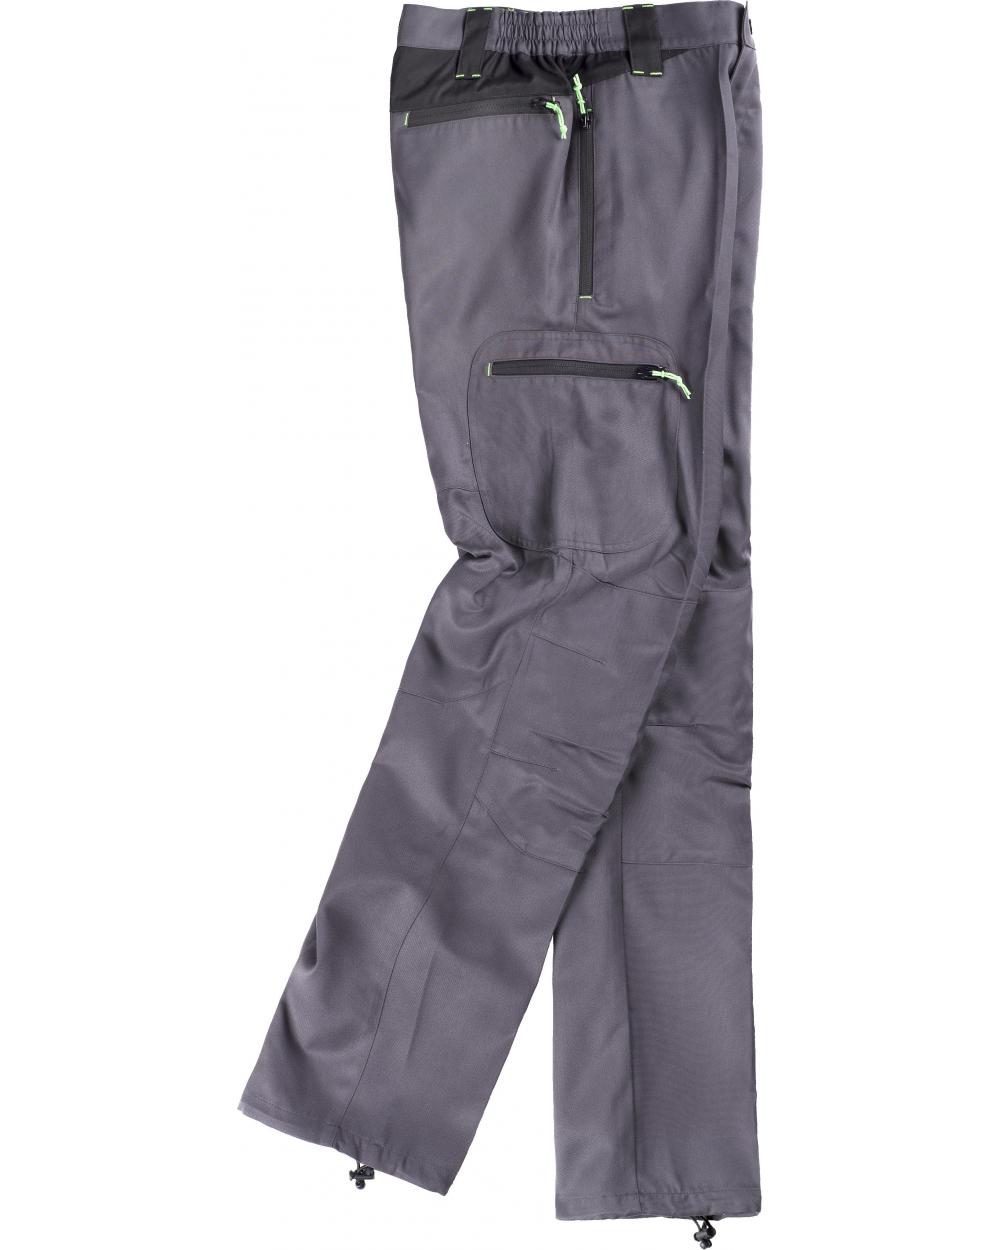 Comprar Pantalon con tejido viscosa S9880 Gris+Negro workteam barato